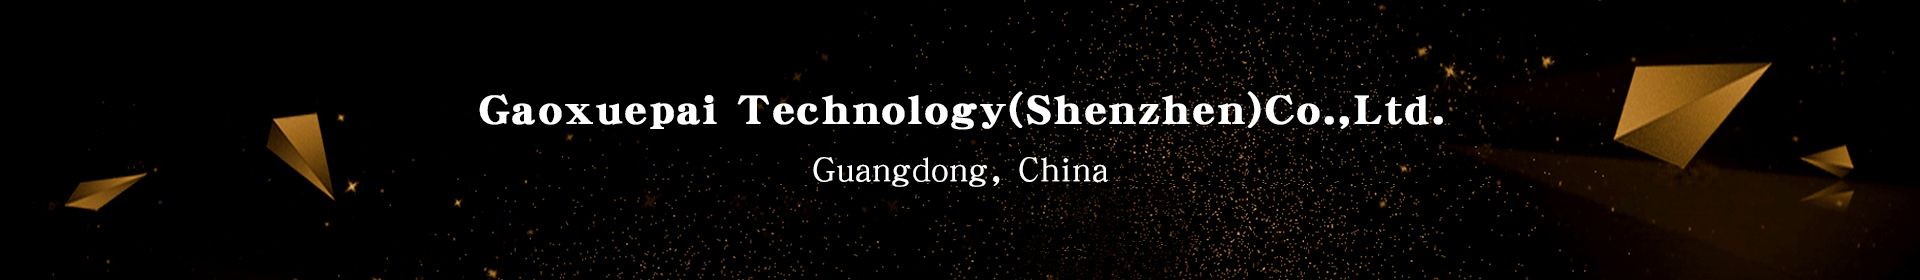 Gaoxuepai Technology (Shenzhen) Co.Ltd